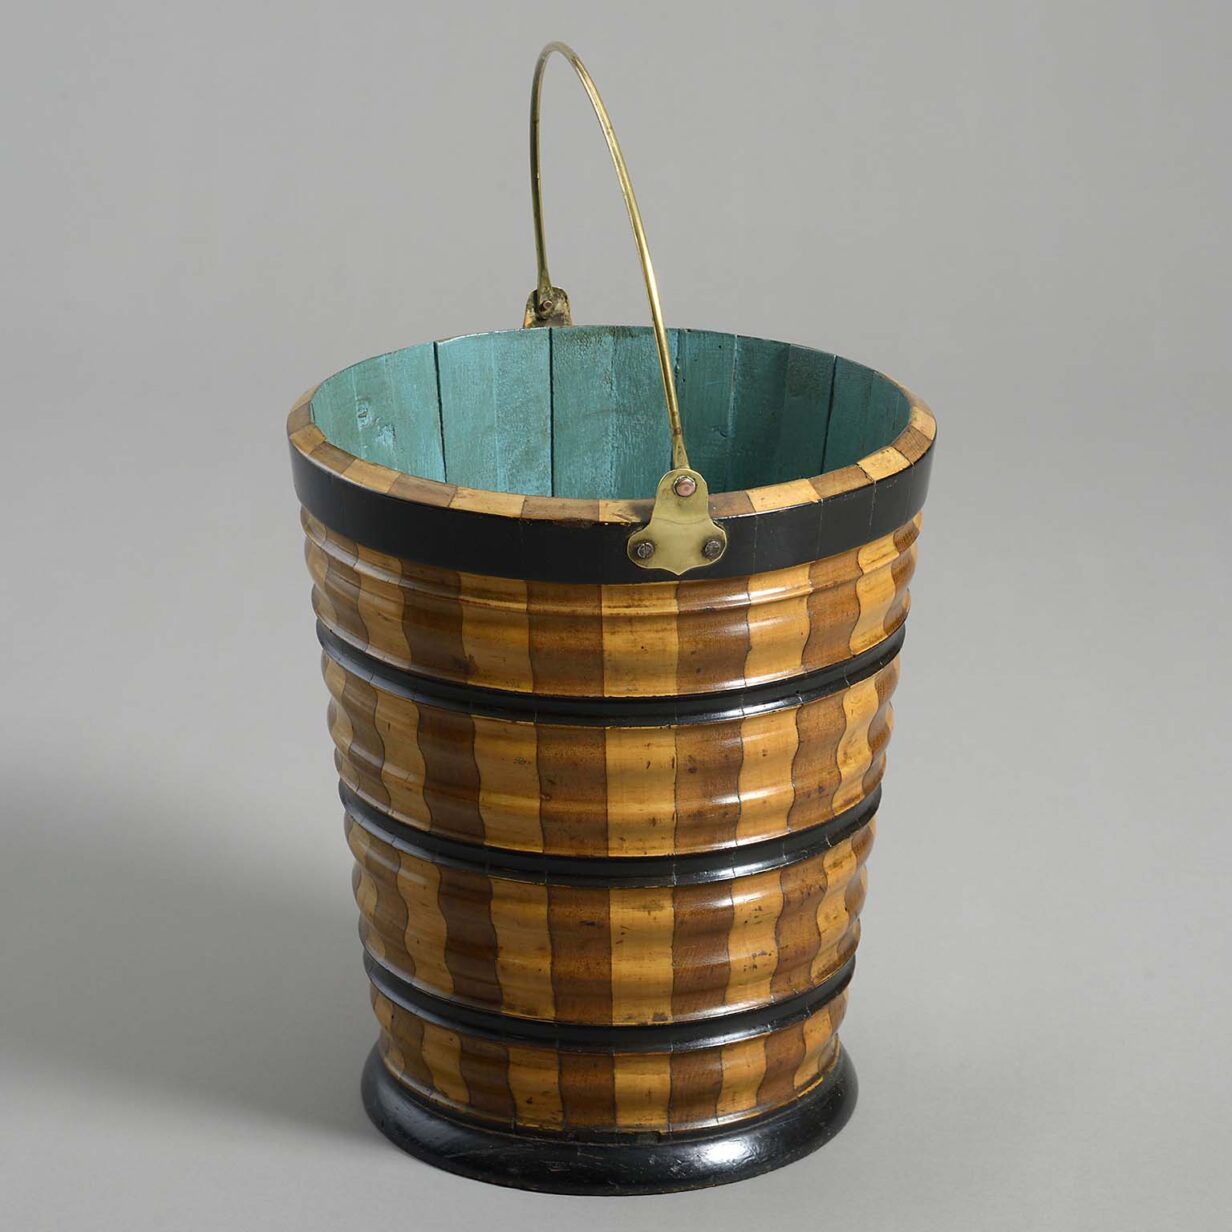 Late 18th century dutch fire bucket